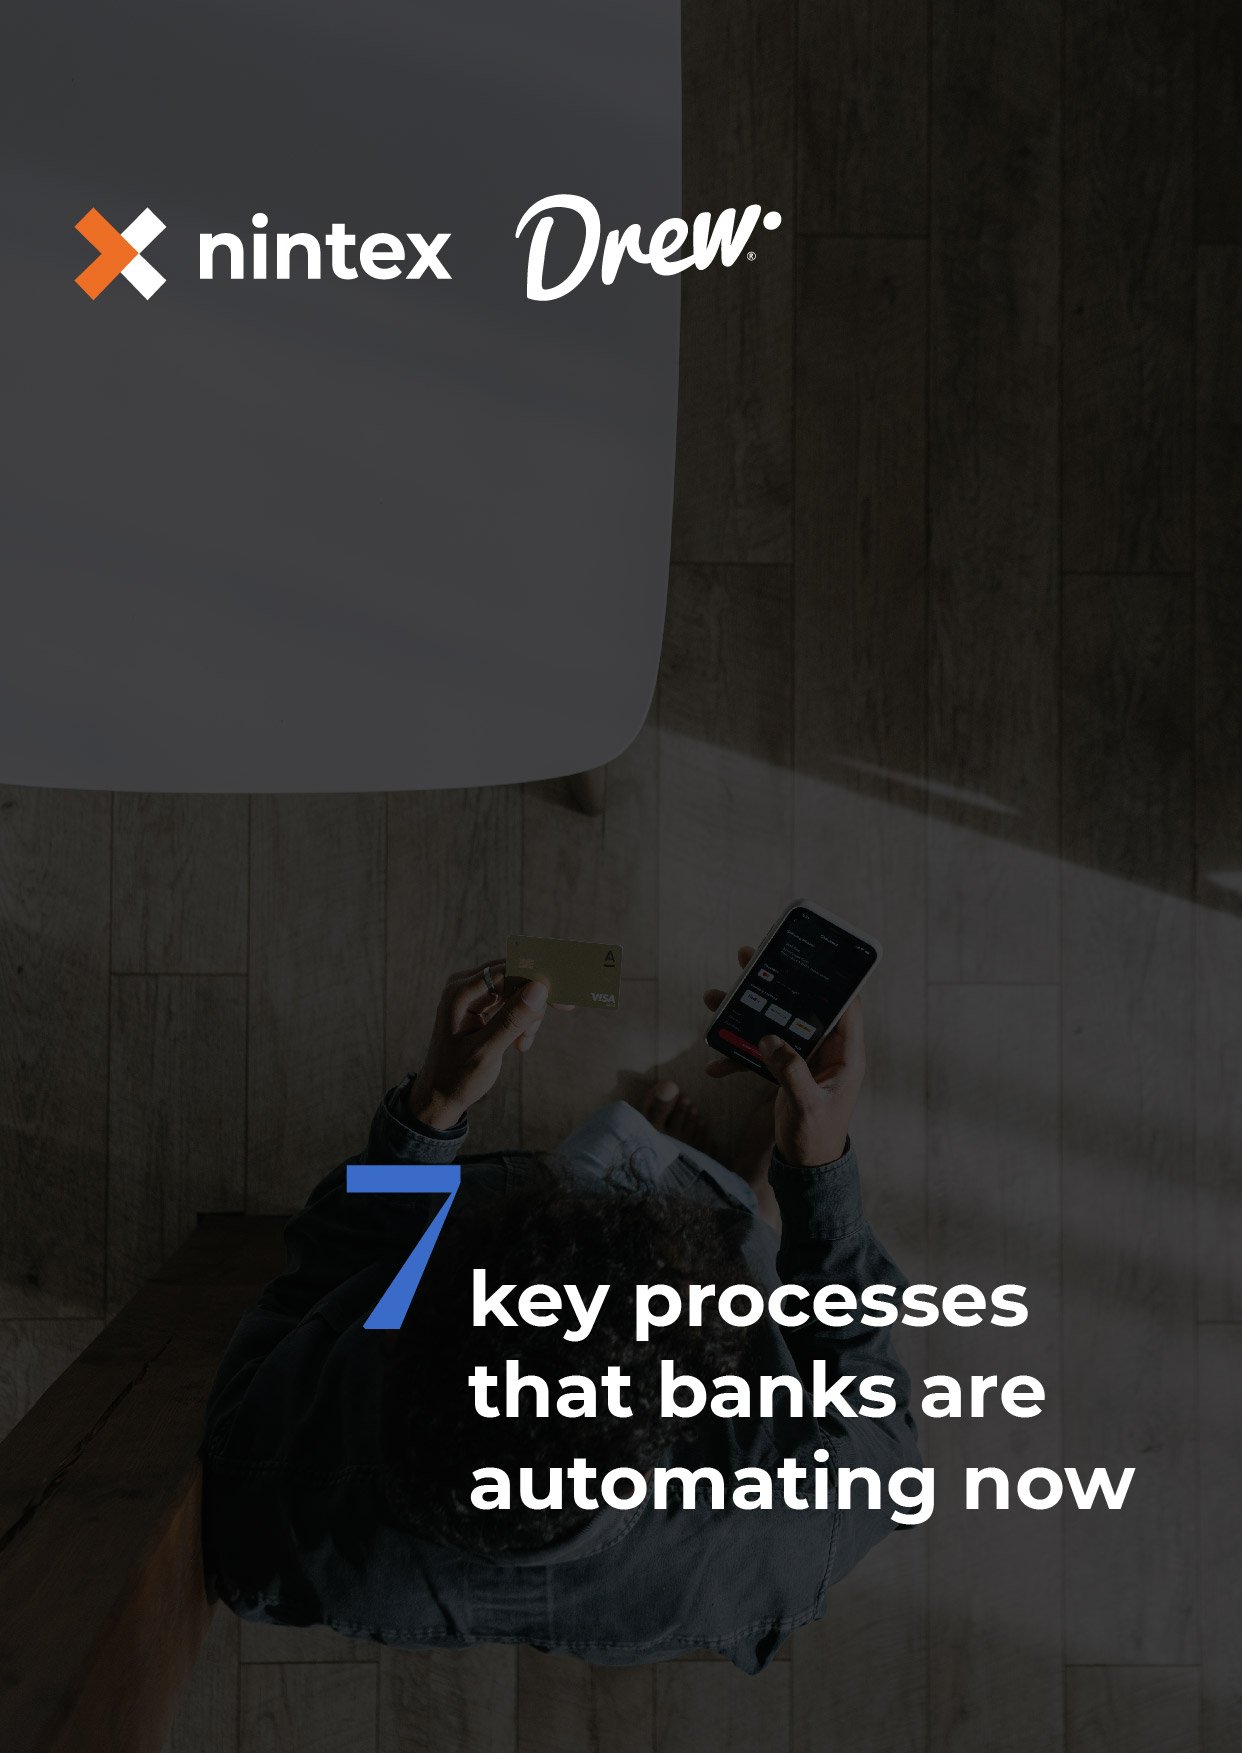 EN_7 key processes that banks are automating now_nintex-drew-destacada